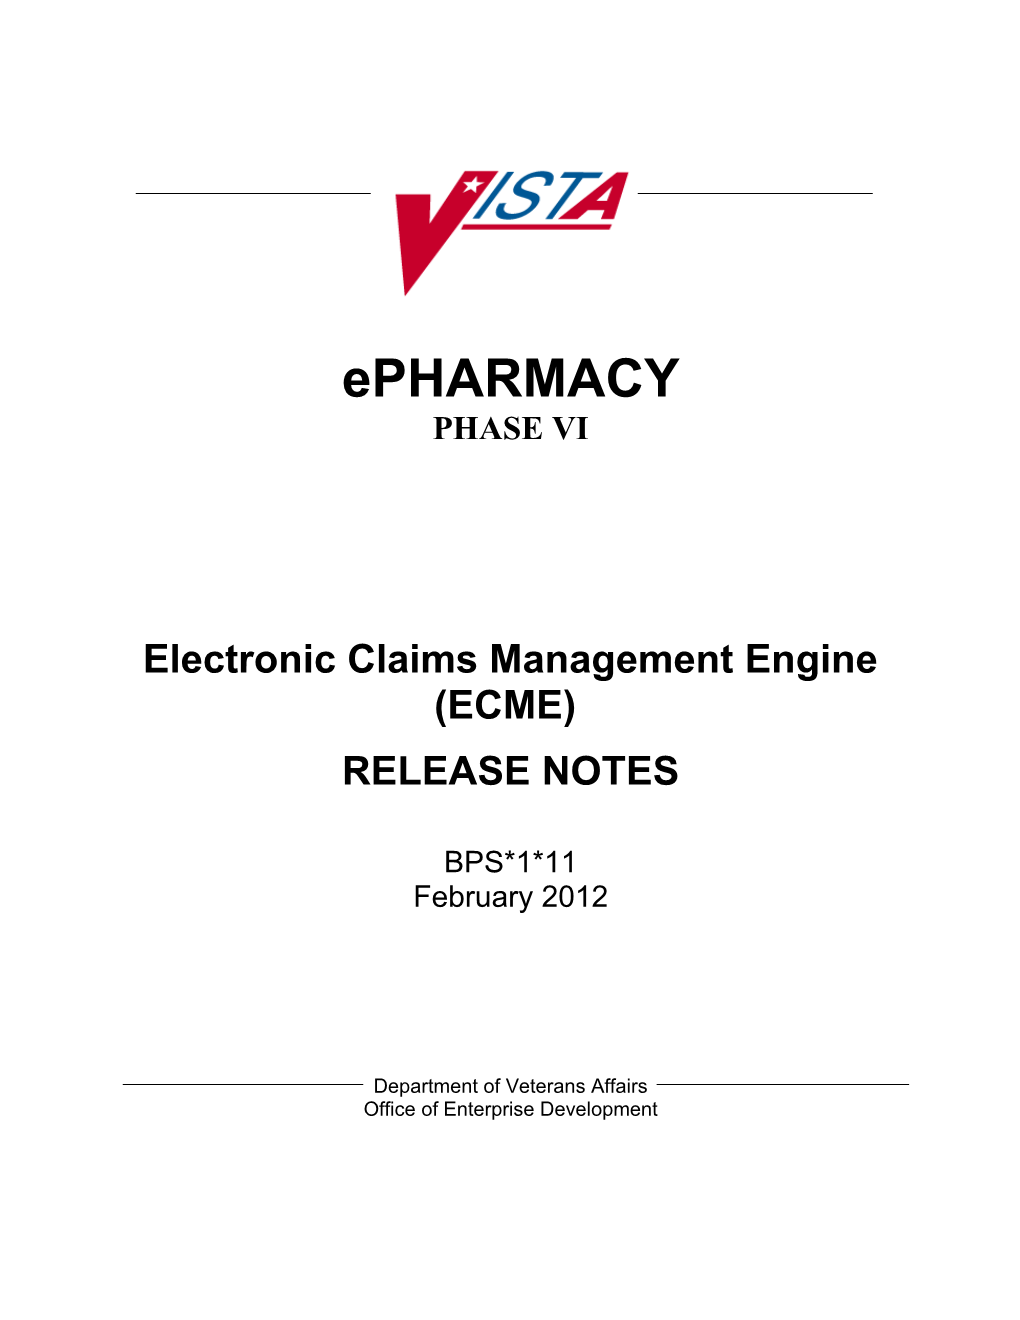 Department of Veterans Affairs ECME V.1 Patch 11 Release Notes